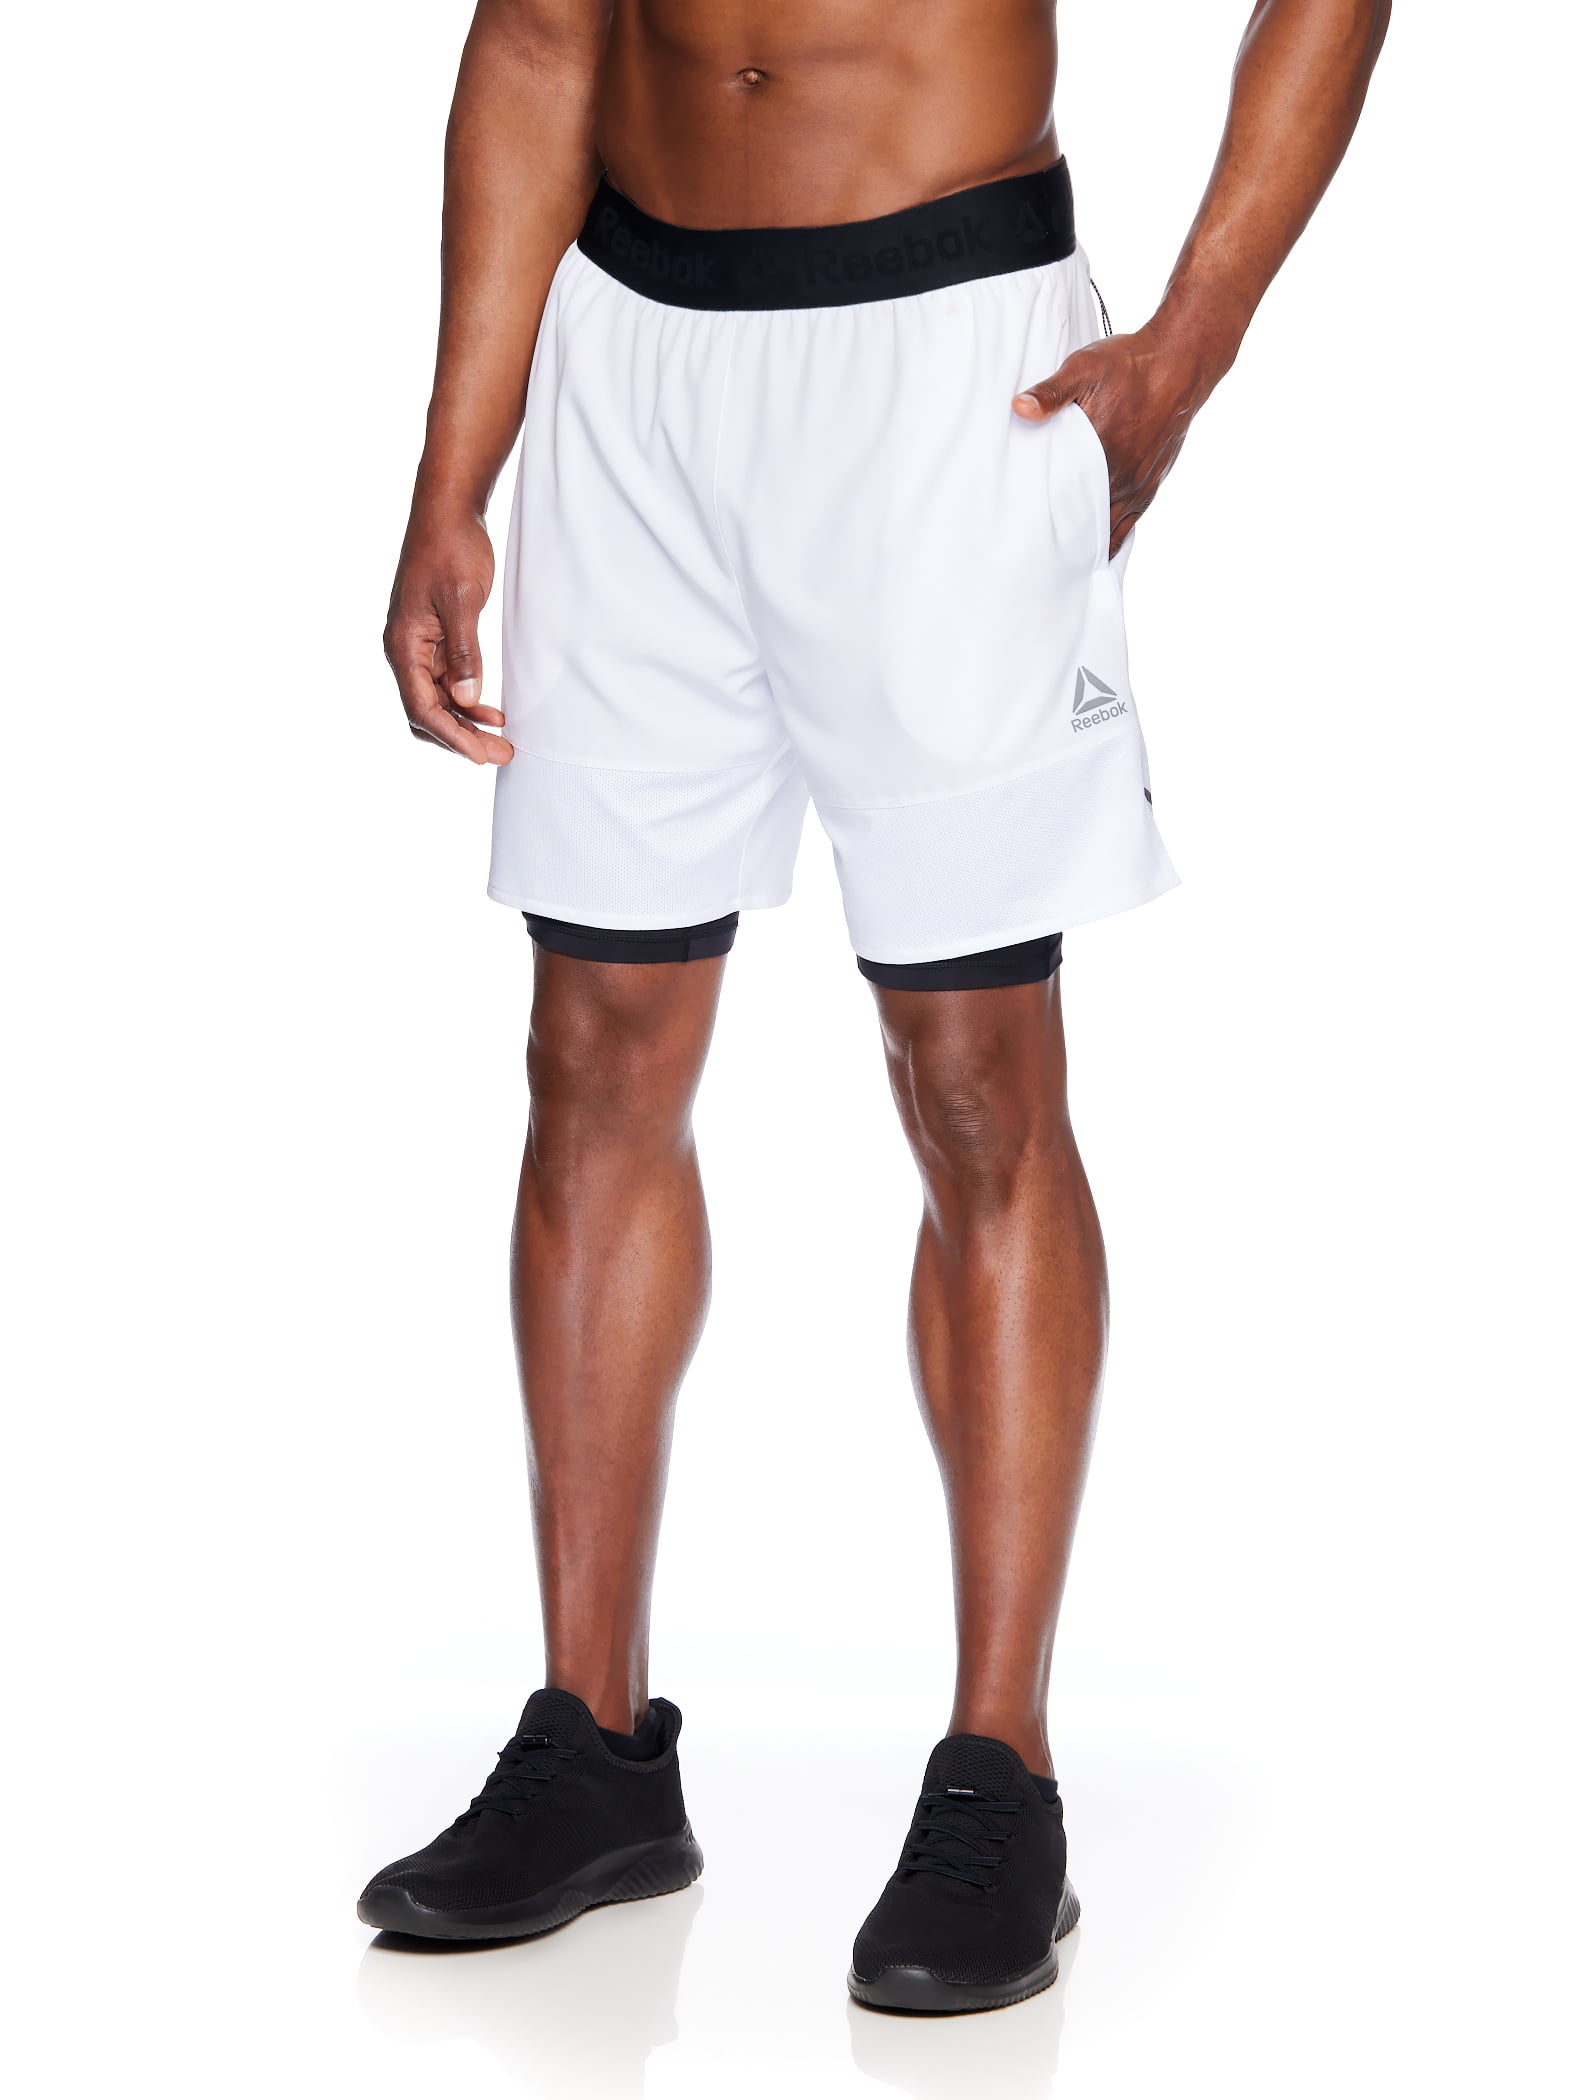 Reebok Official NBA Basketball Compression Shorts Undershorts Adult Large L